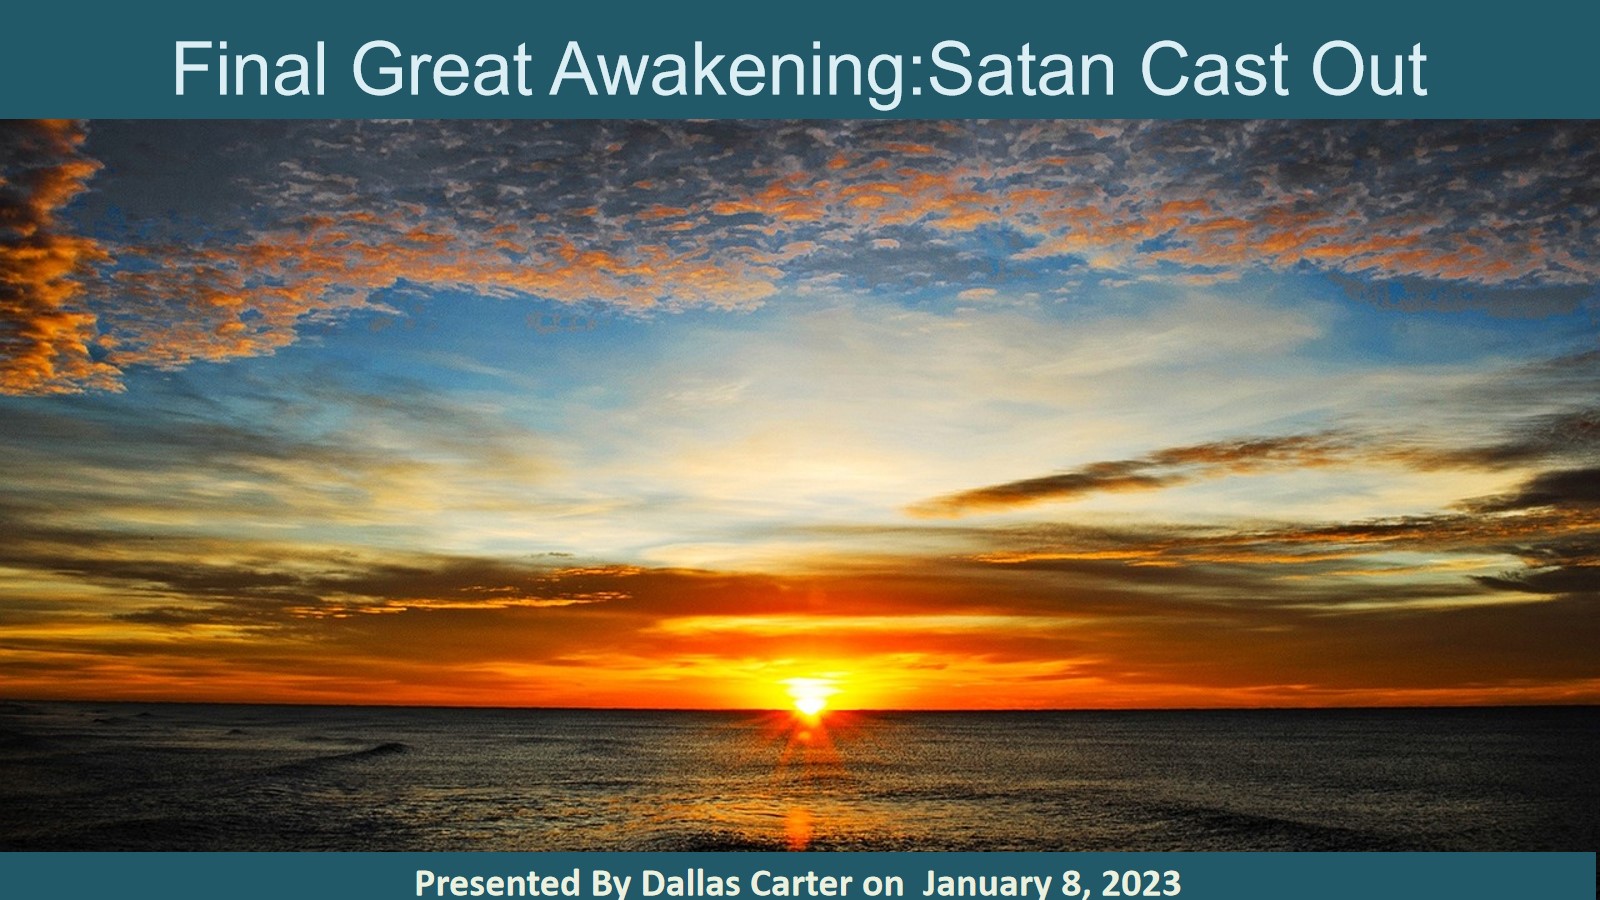 The Final Great Awakening: Satan Cast Out